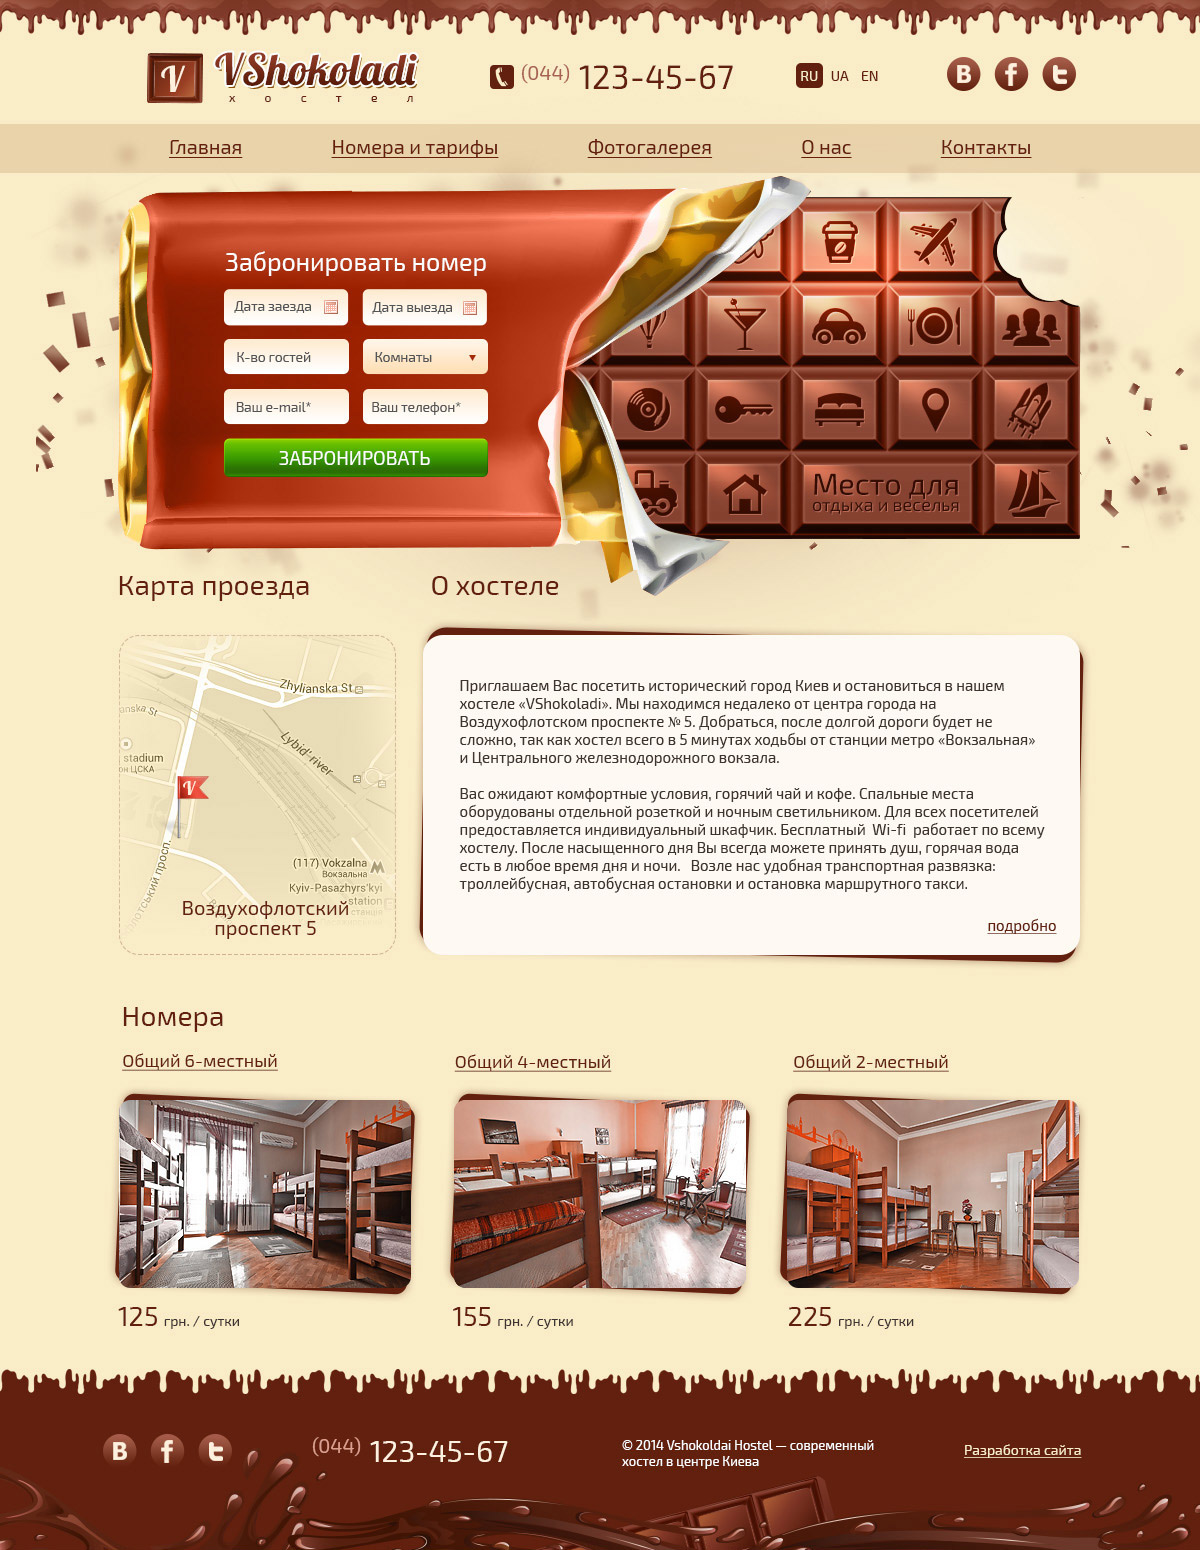 Home page design of Vshokoladi website